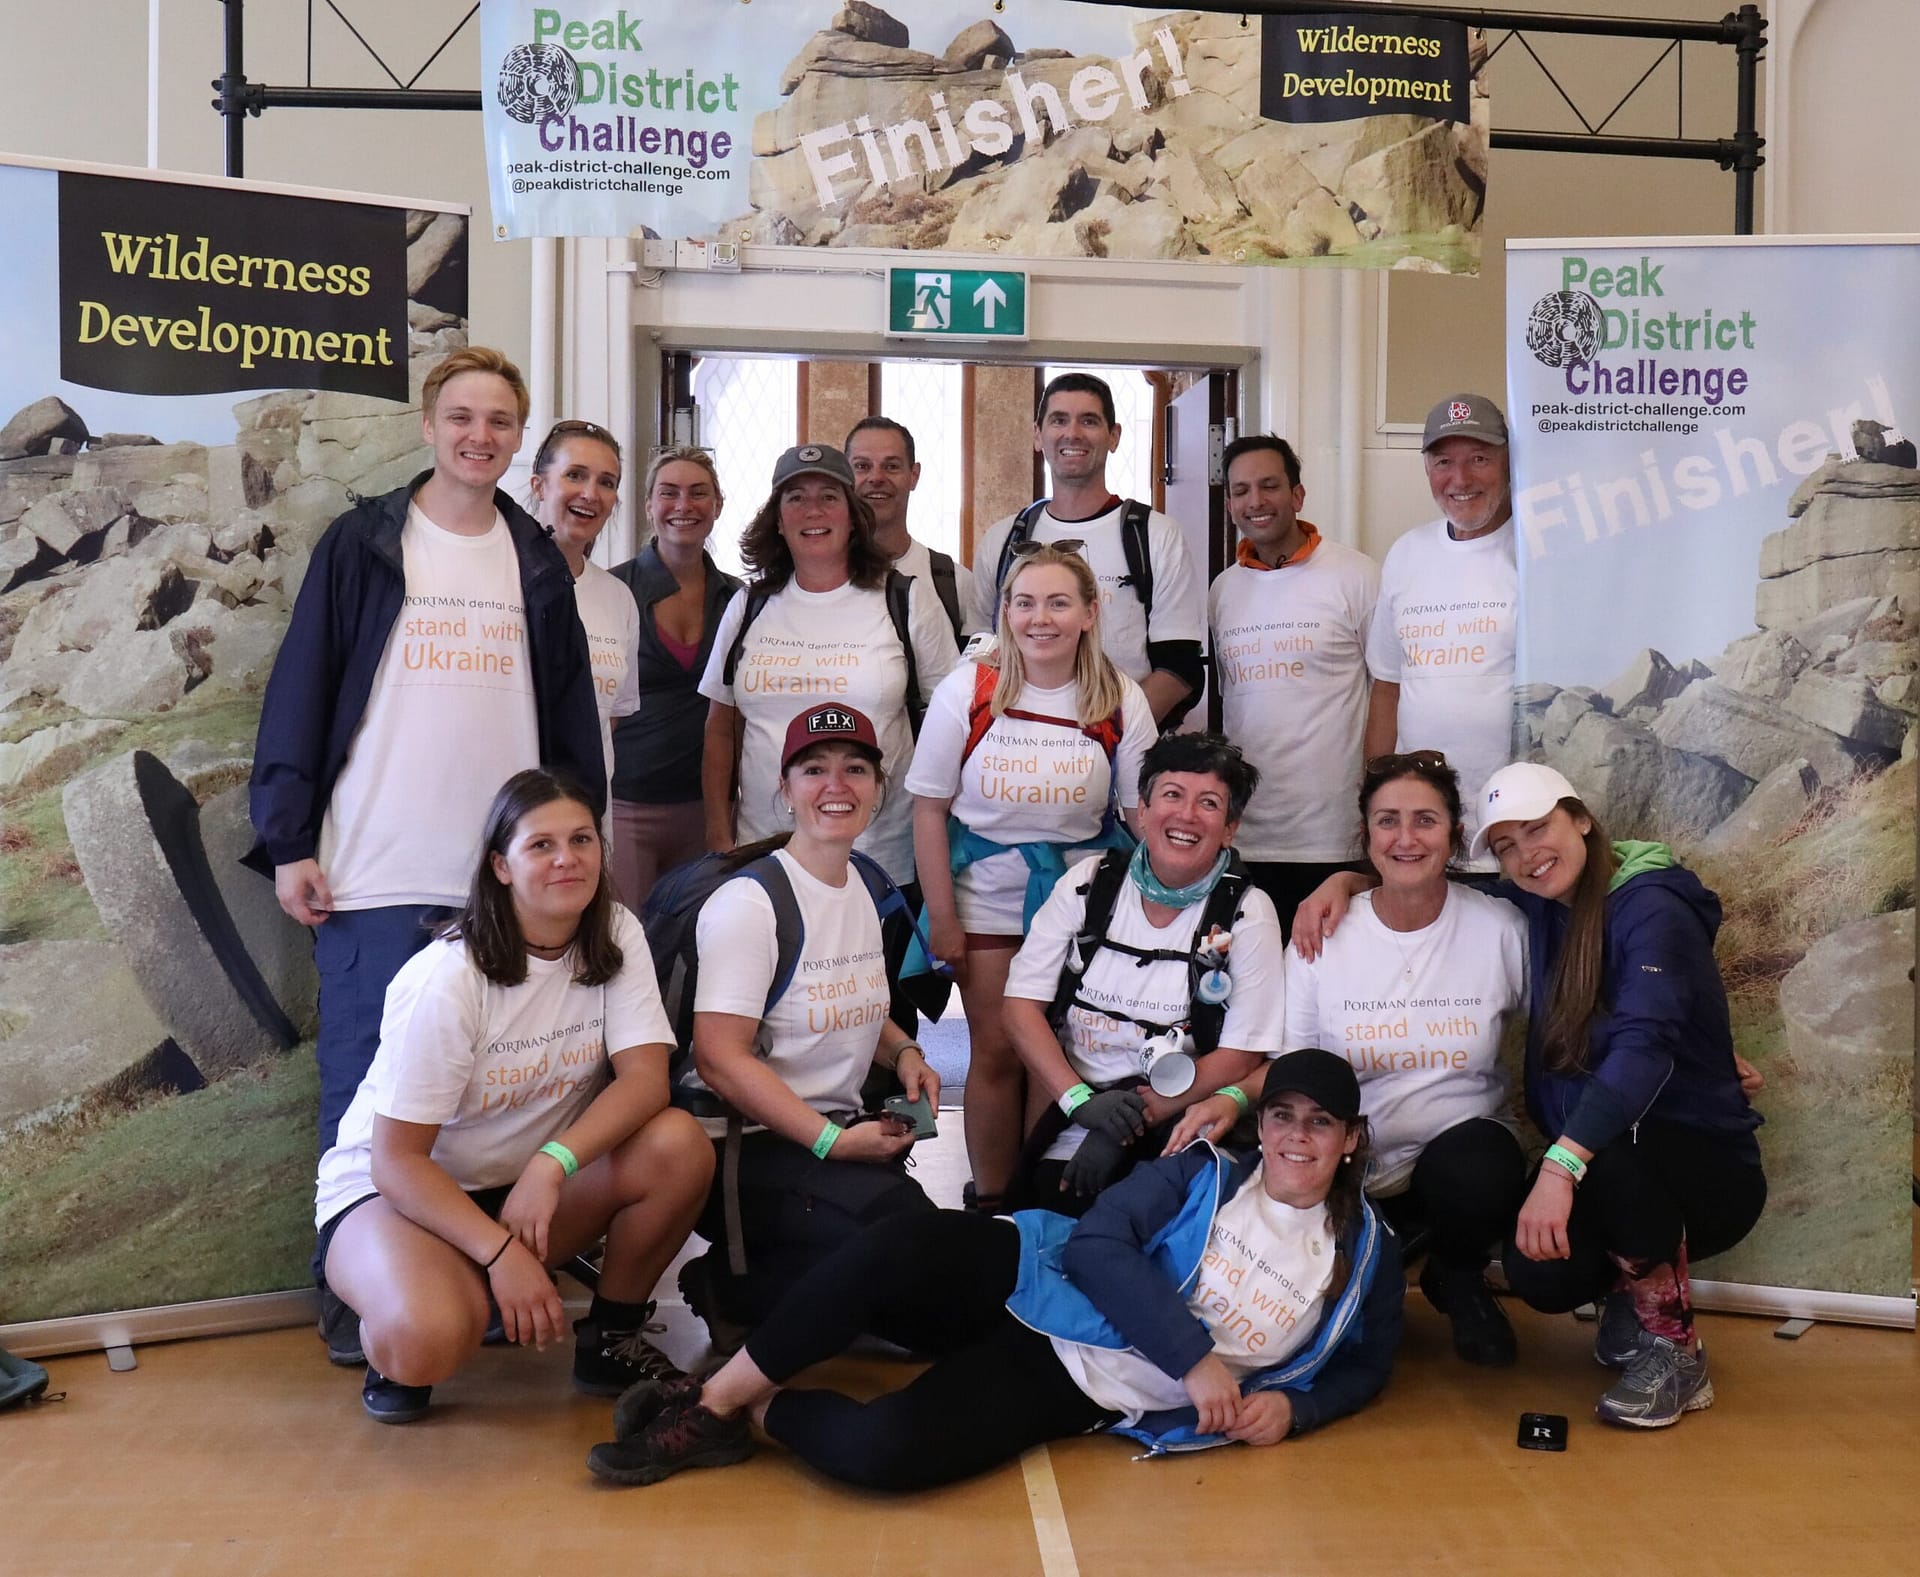 Corporate Peak District Challenge walking event, Wilderness Development